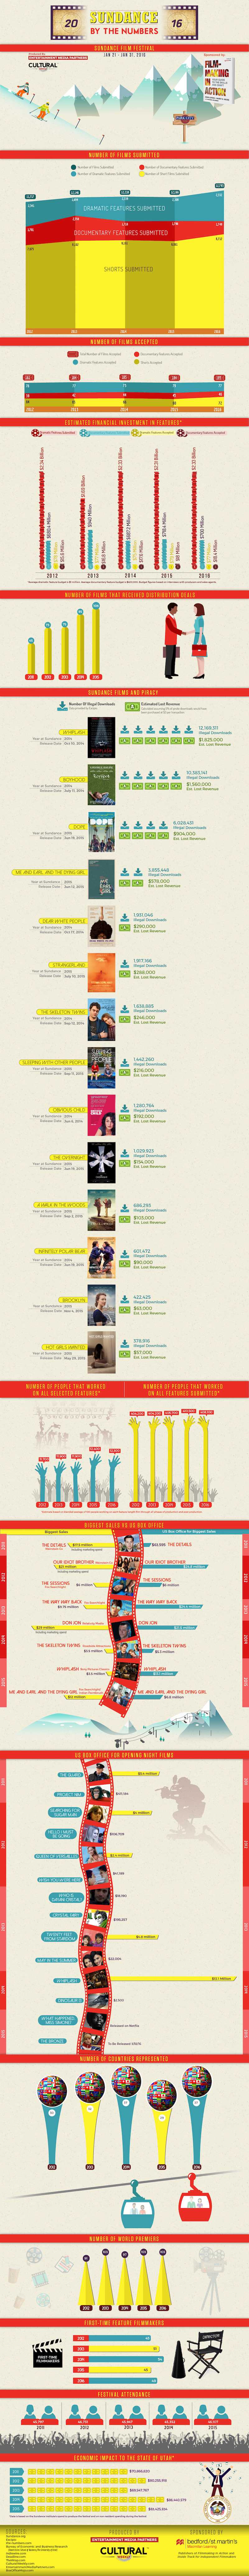 Sundance Infographic 2016 